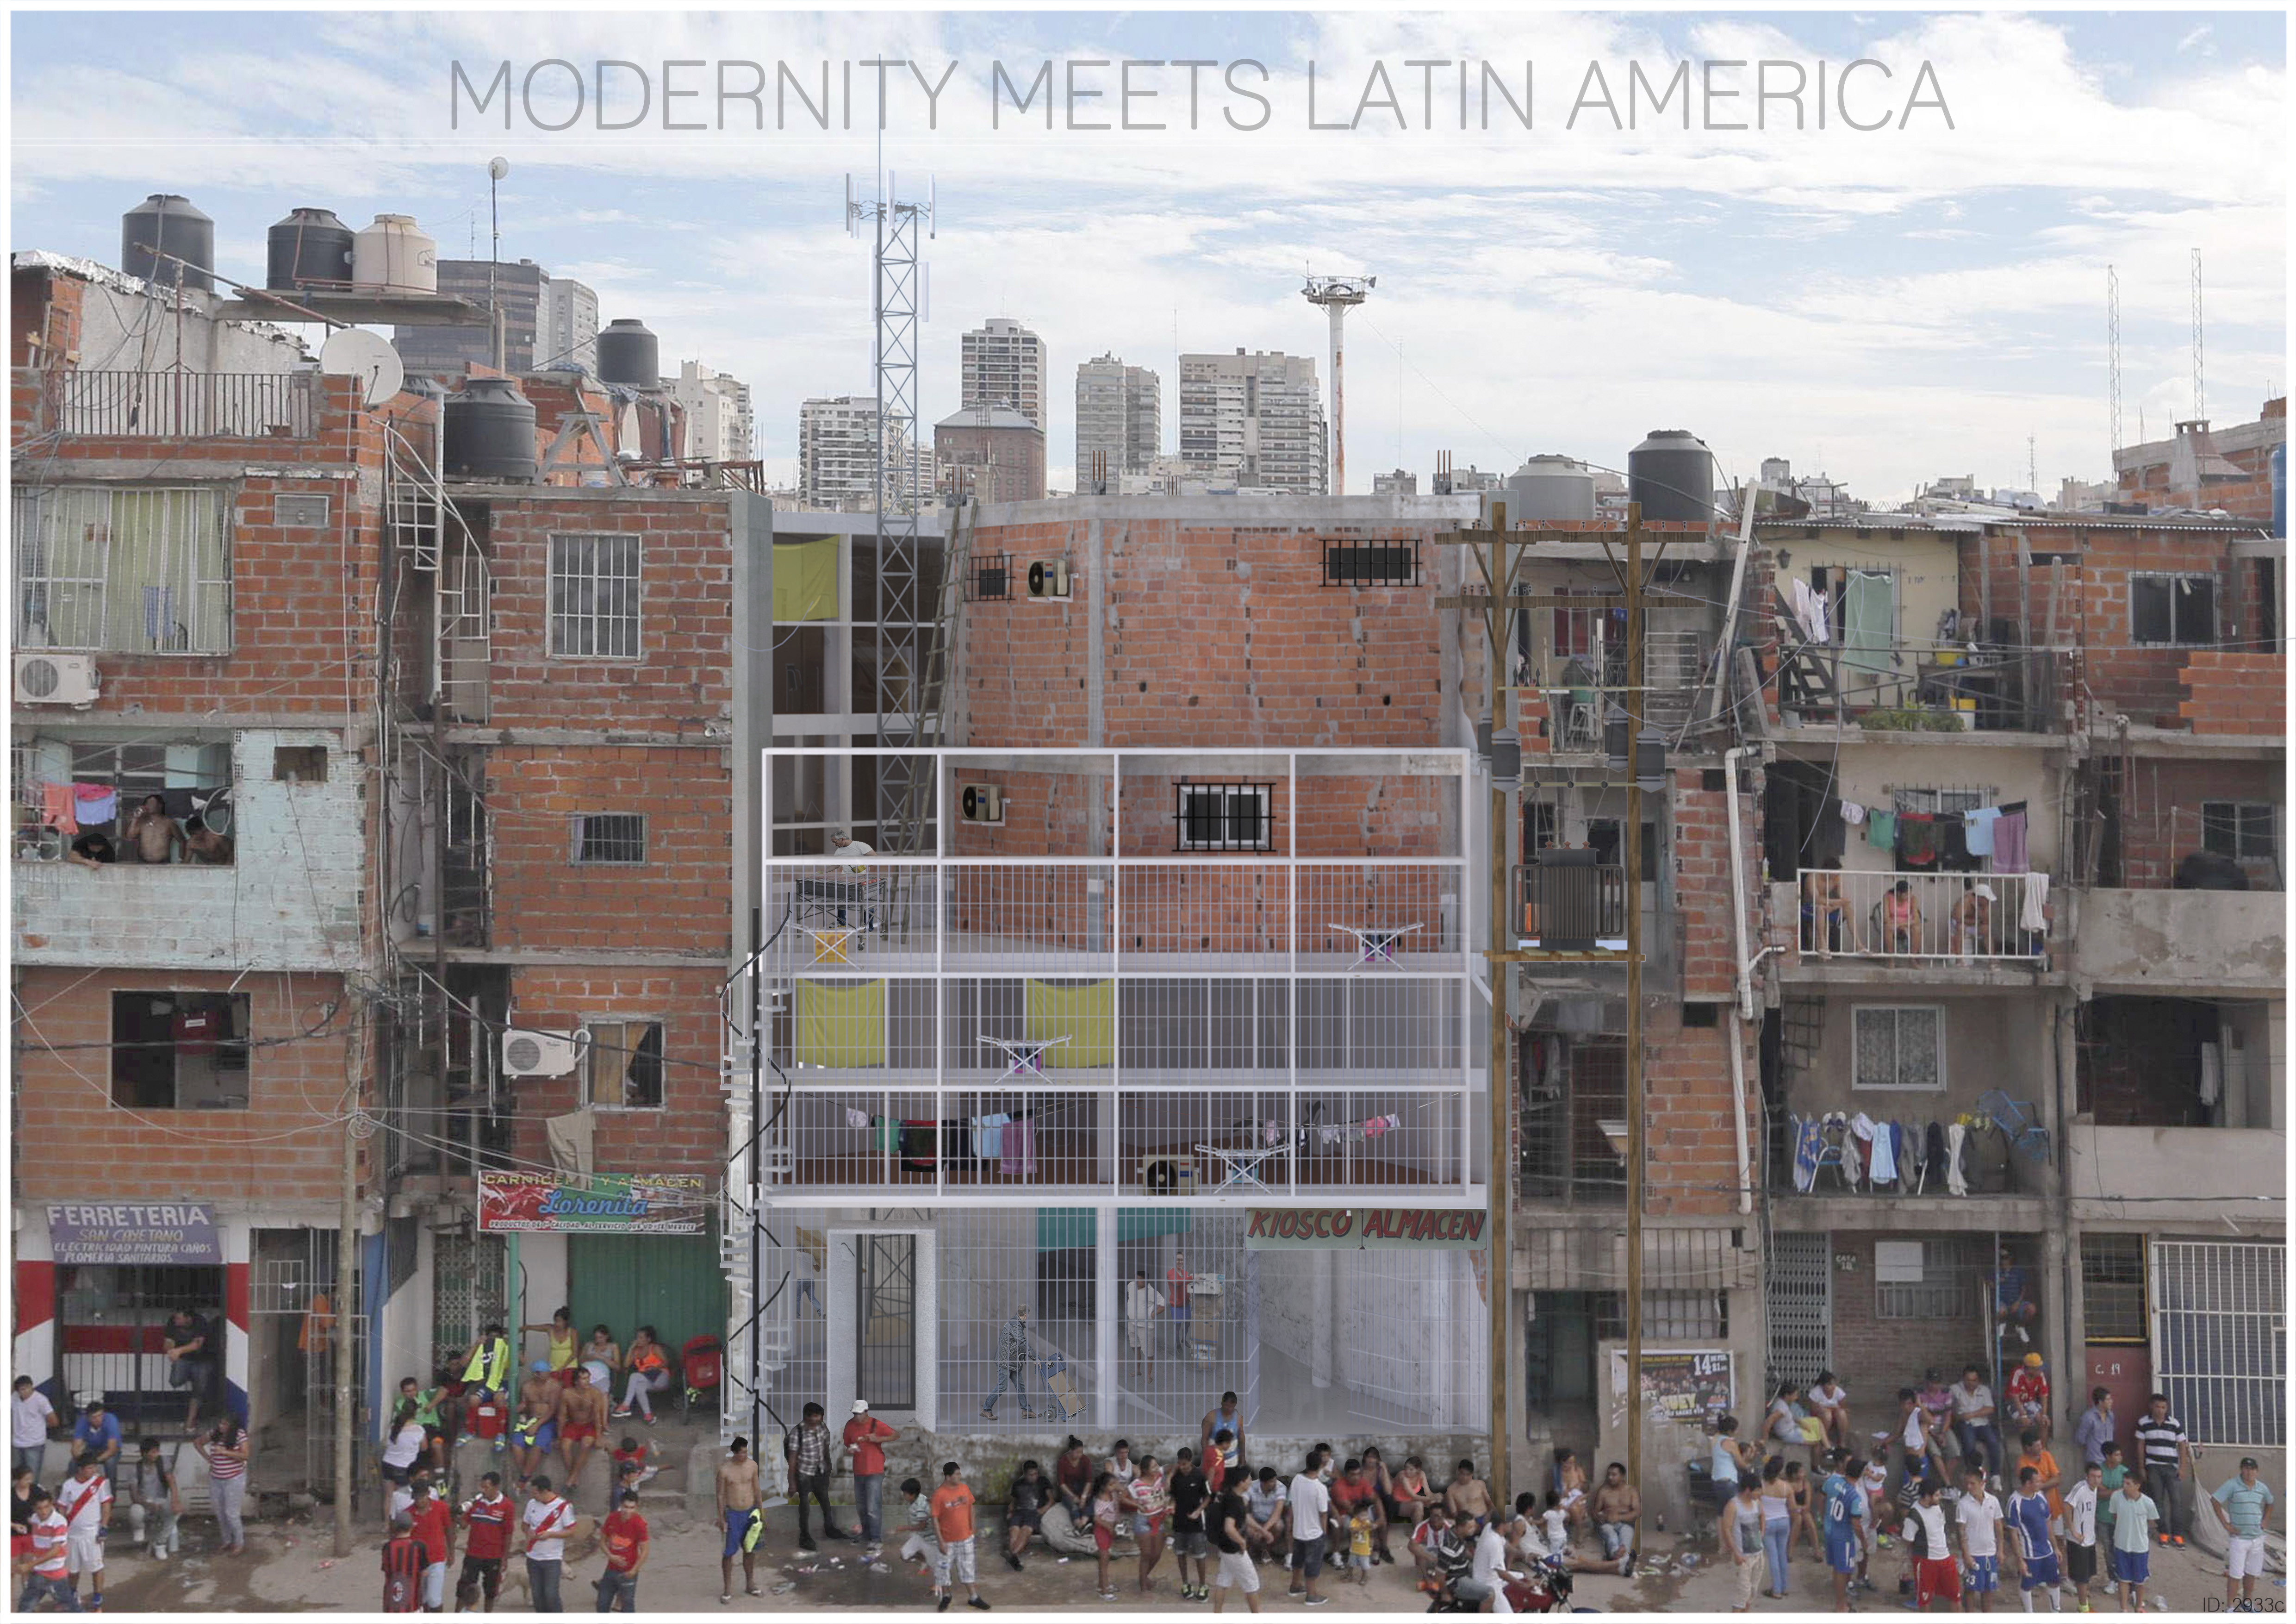 Modernity meets Latin America. Board